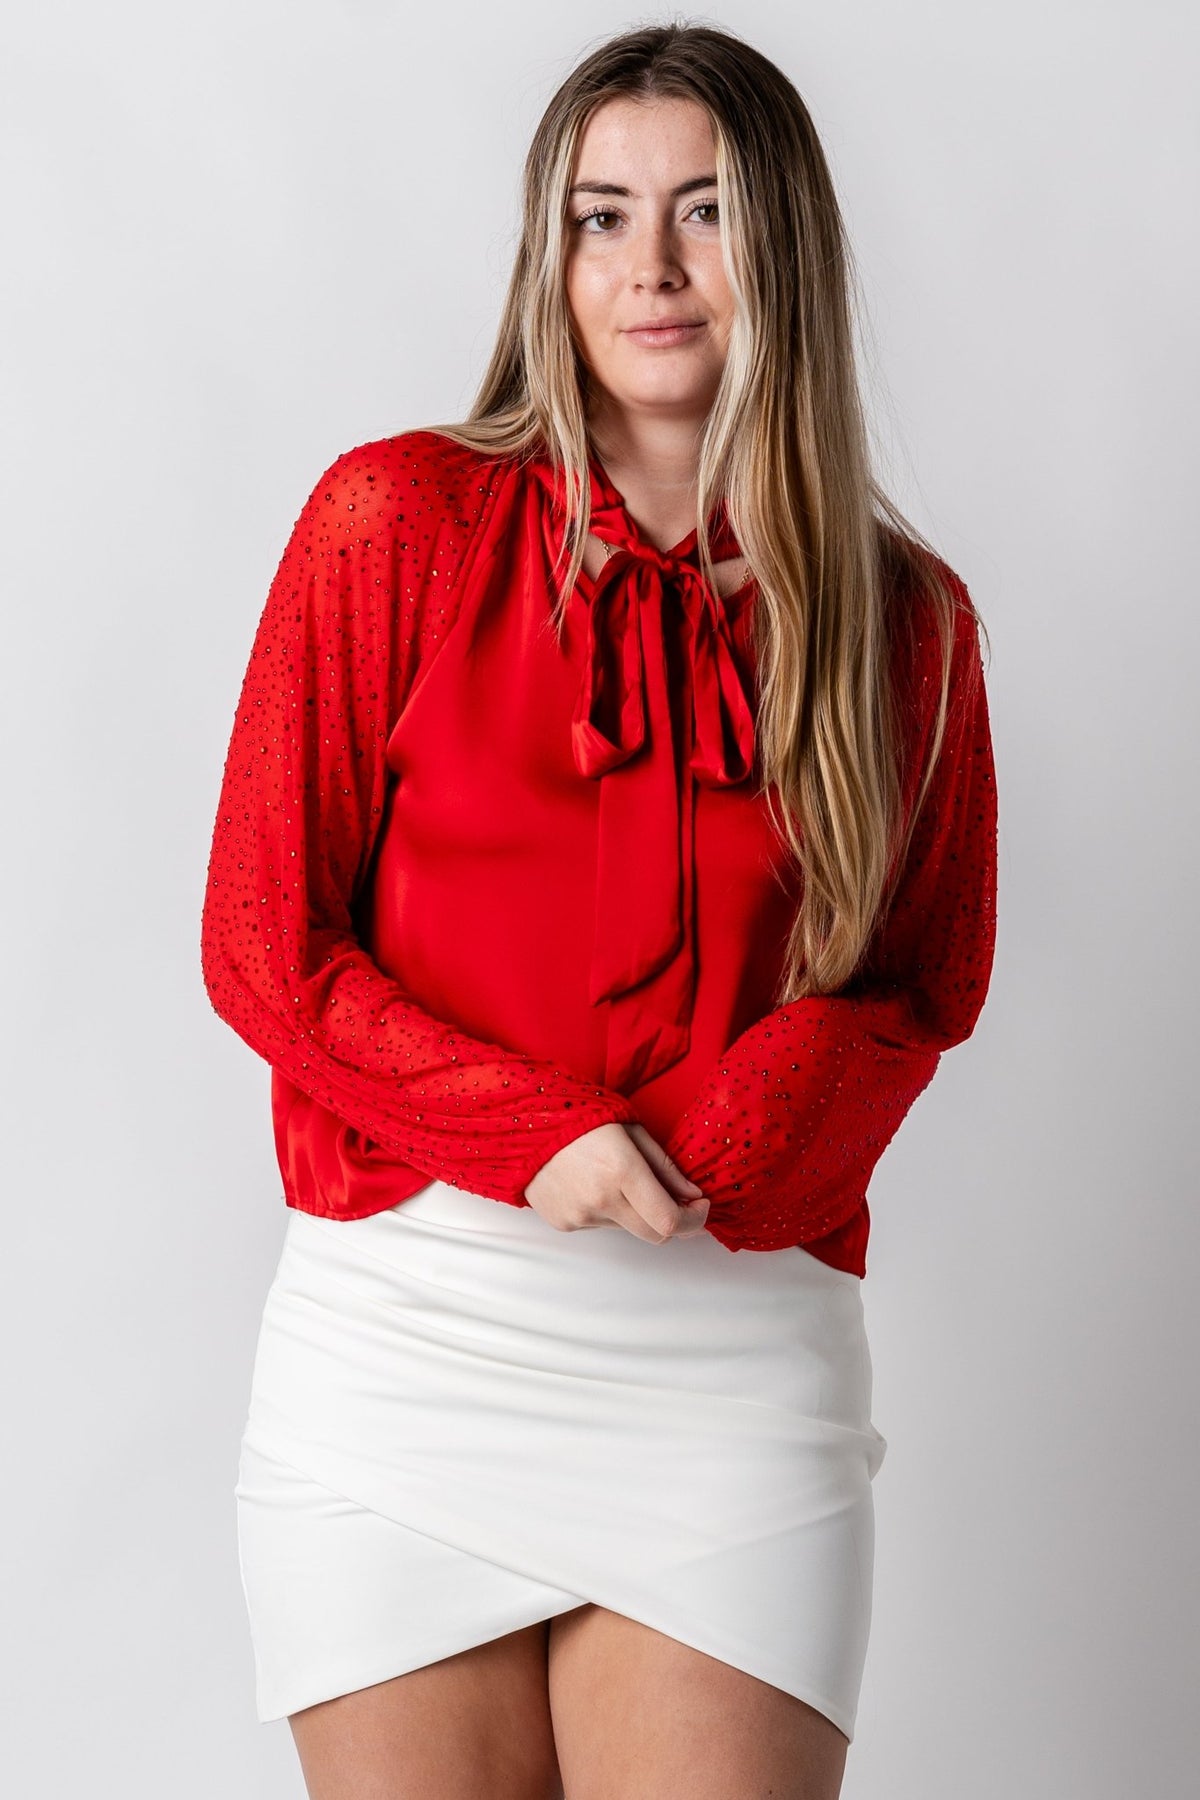 Rhinestone satin blouse crimson - Trendy Holiday Apparel at Lush Fashion Lounge Boutique in Oklahoma City